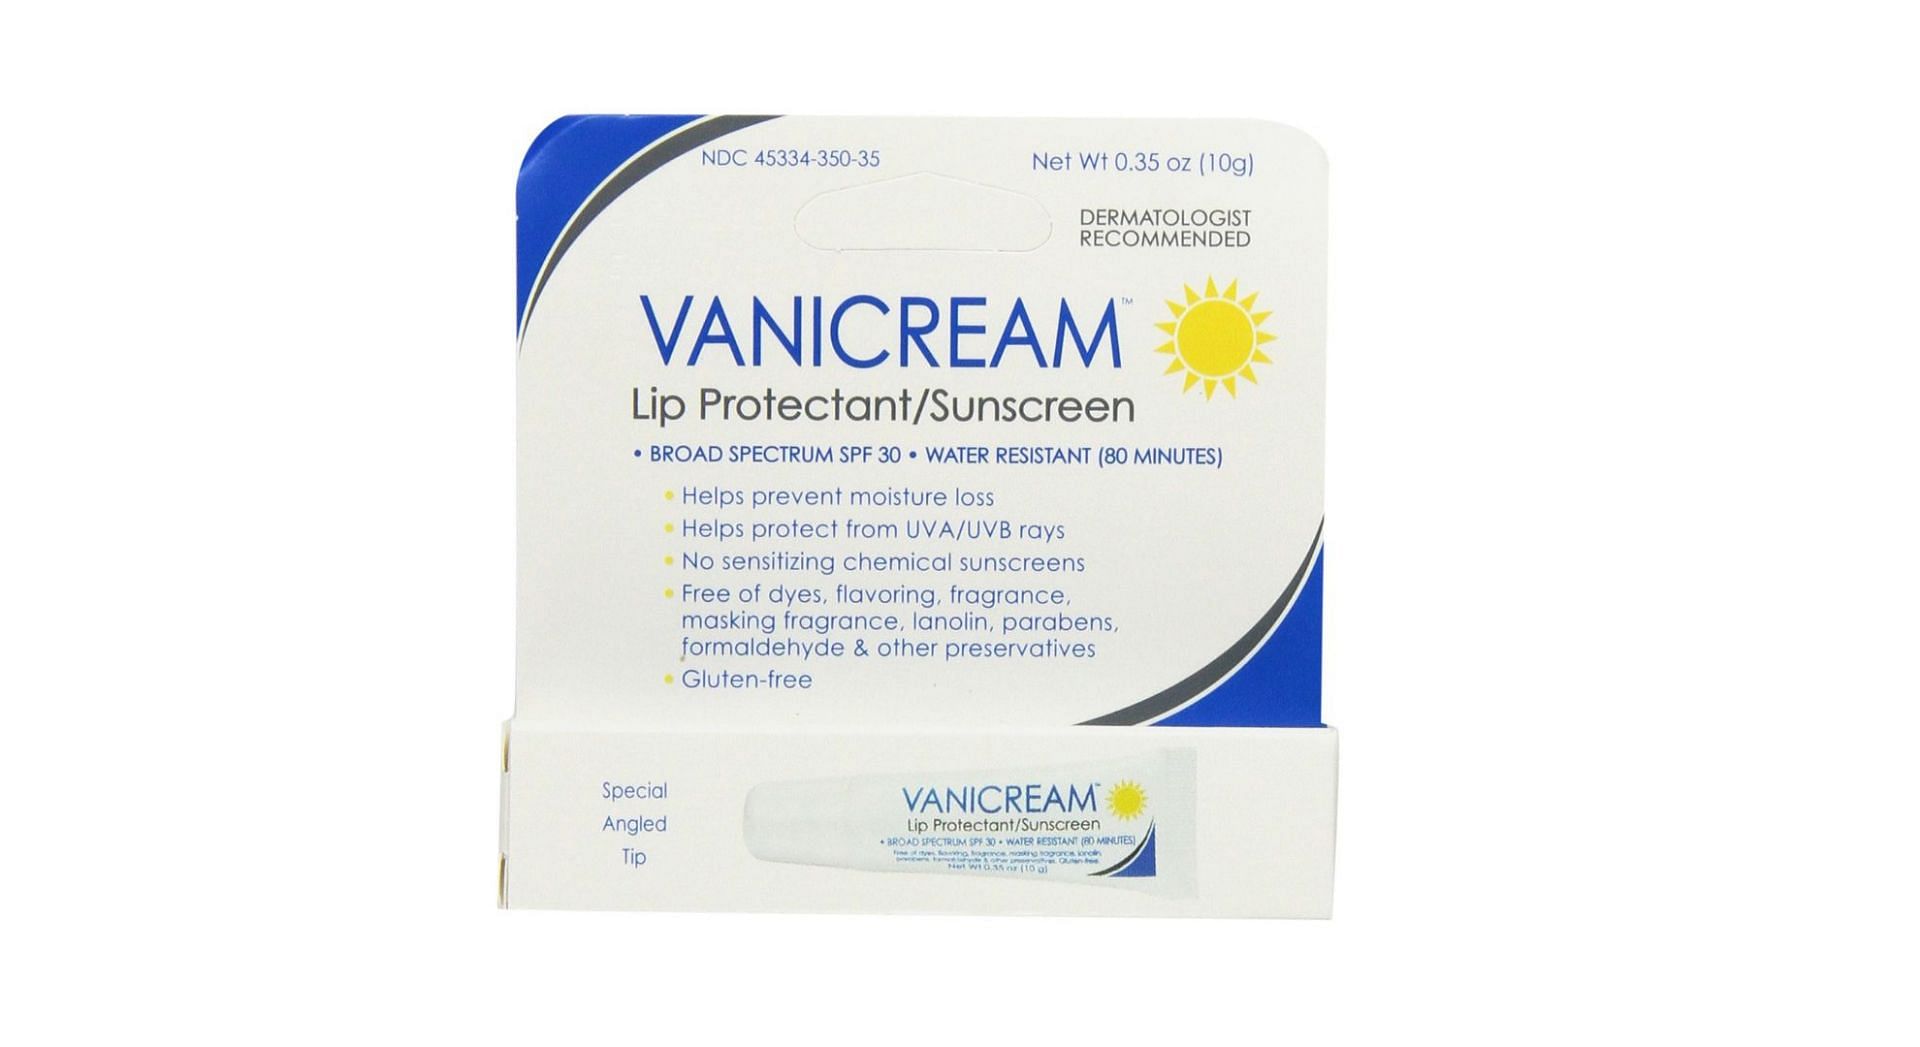 Vanicream Lip Protectant/Sunscreen (Image via Amazon)